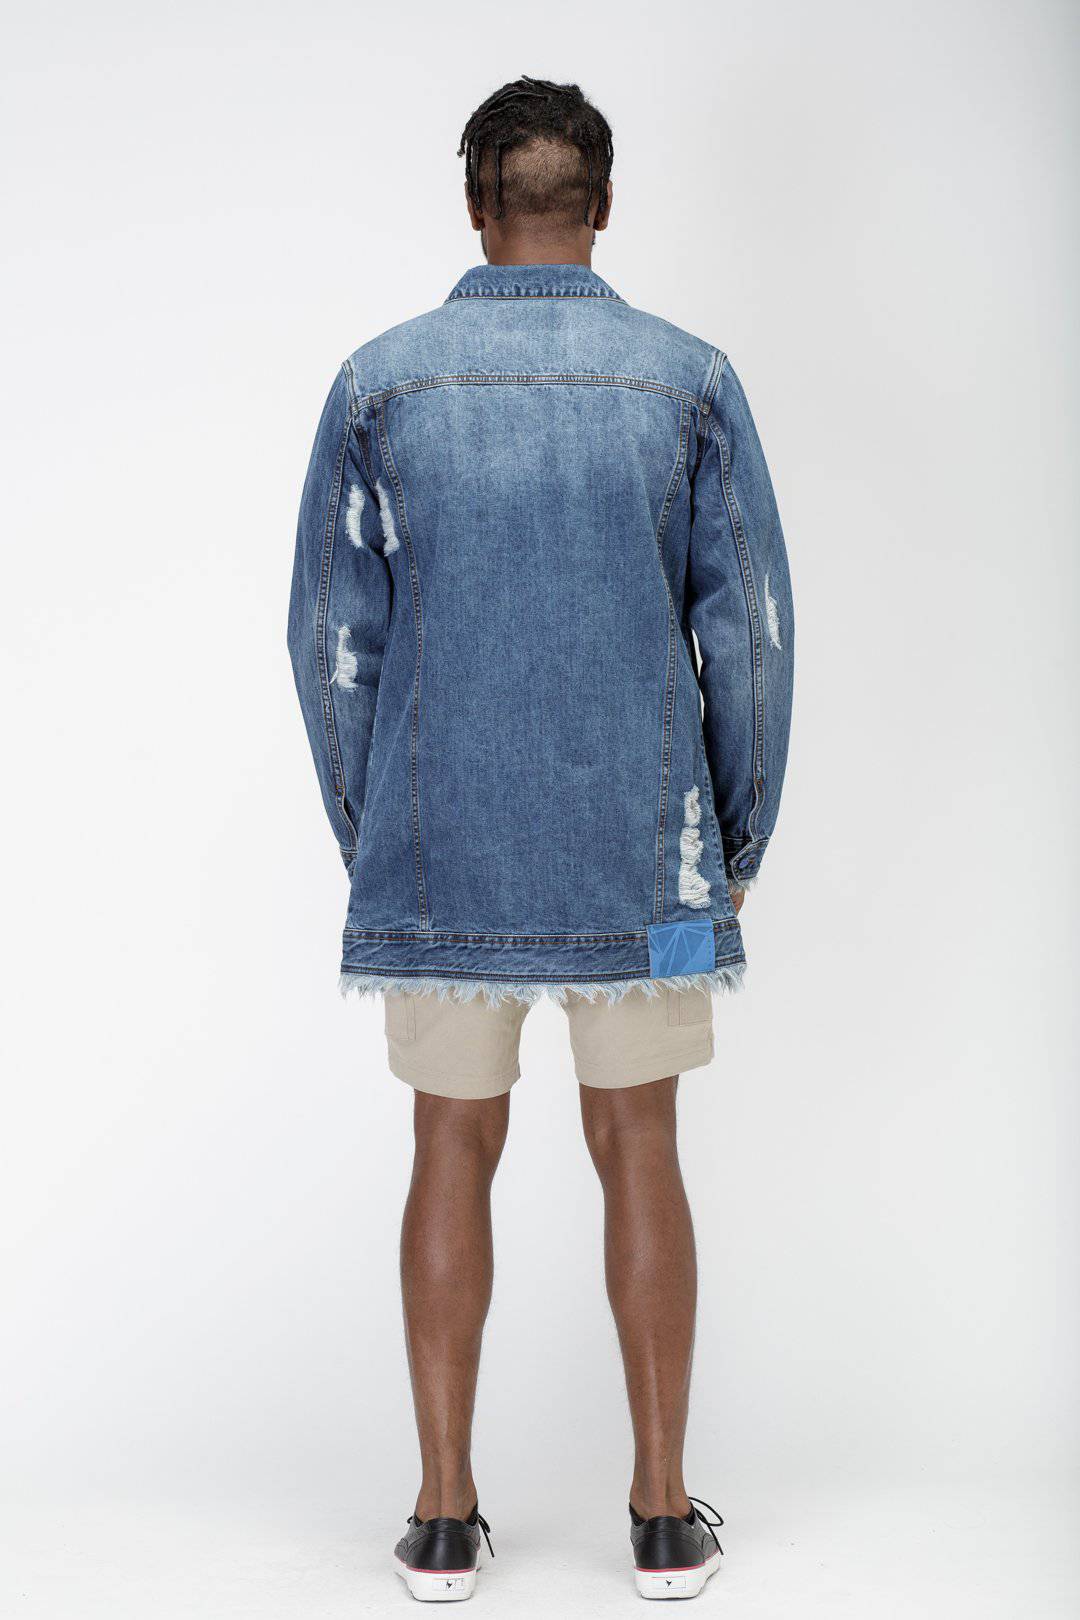 Konus Men's Frayed Long Denim Jacket by Shop at Konus